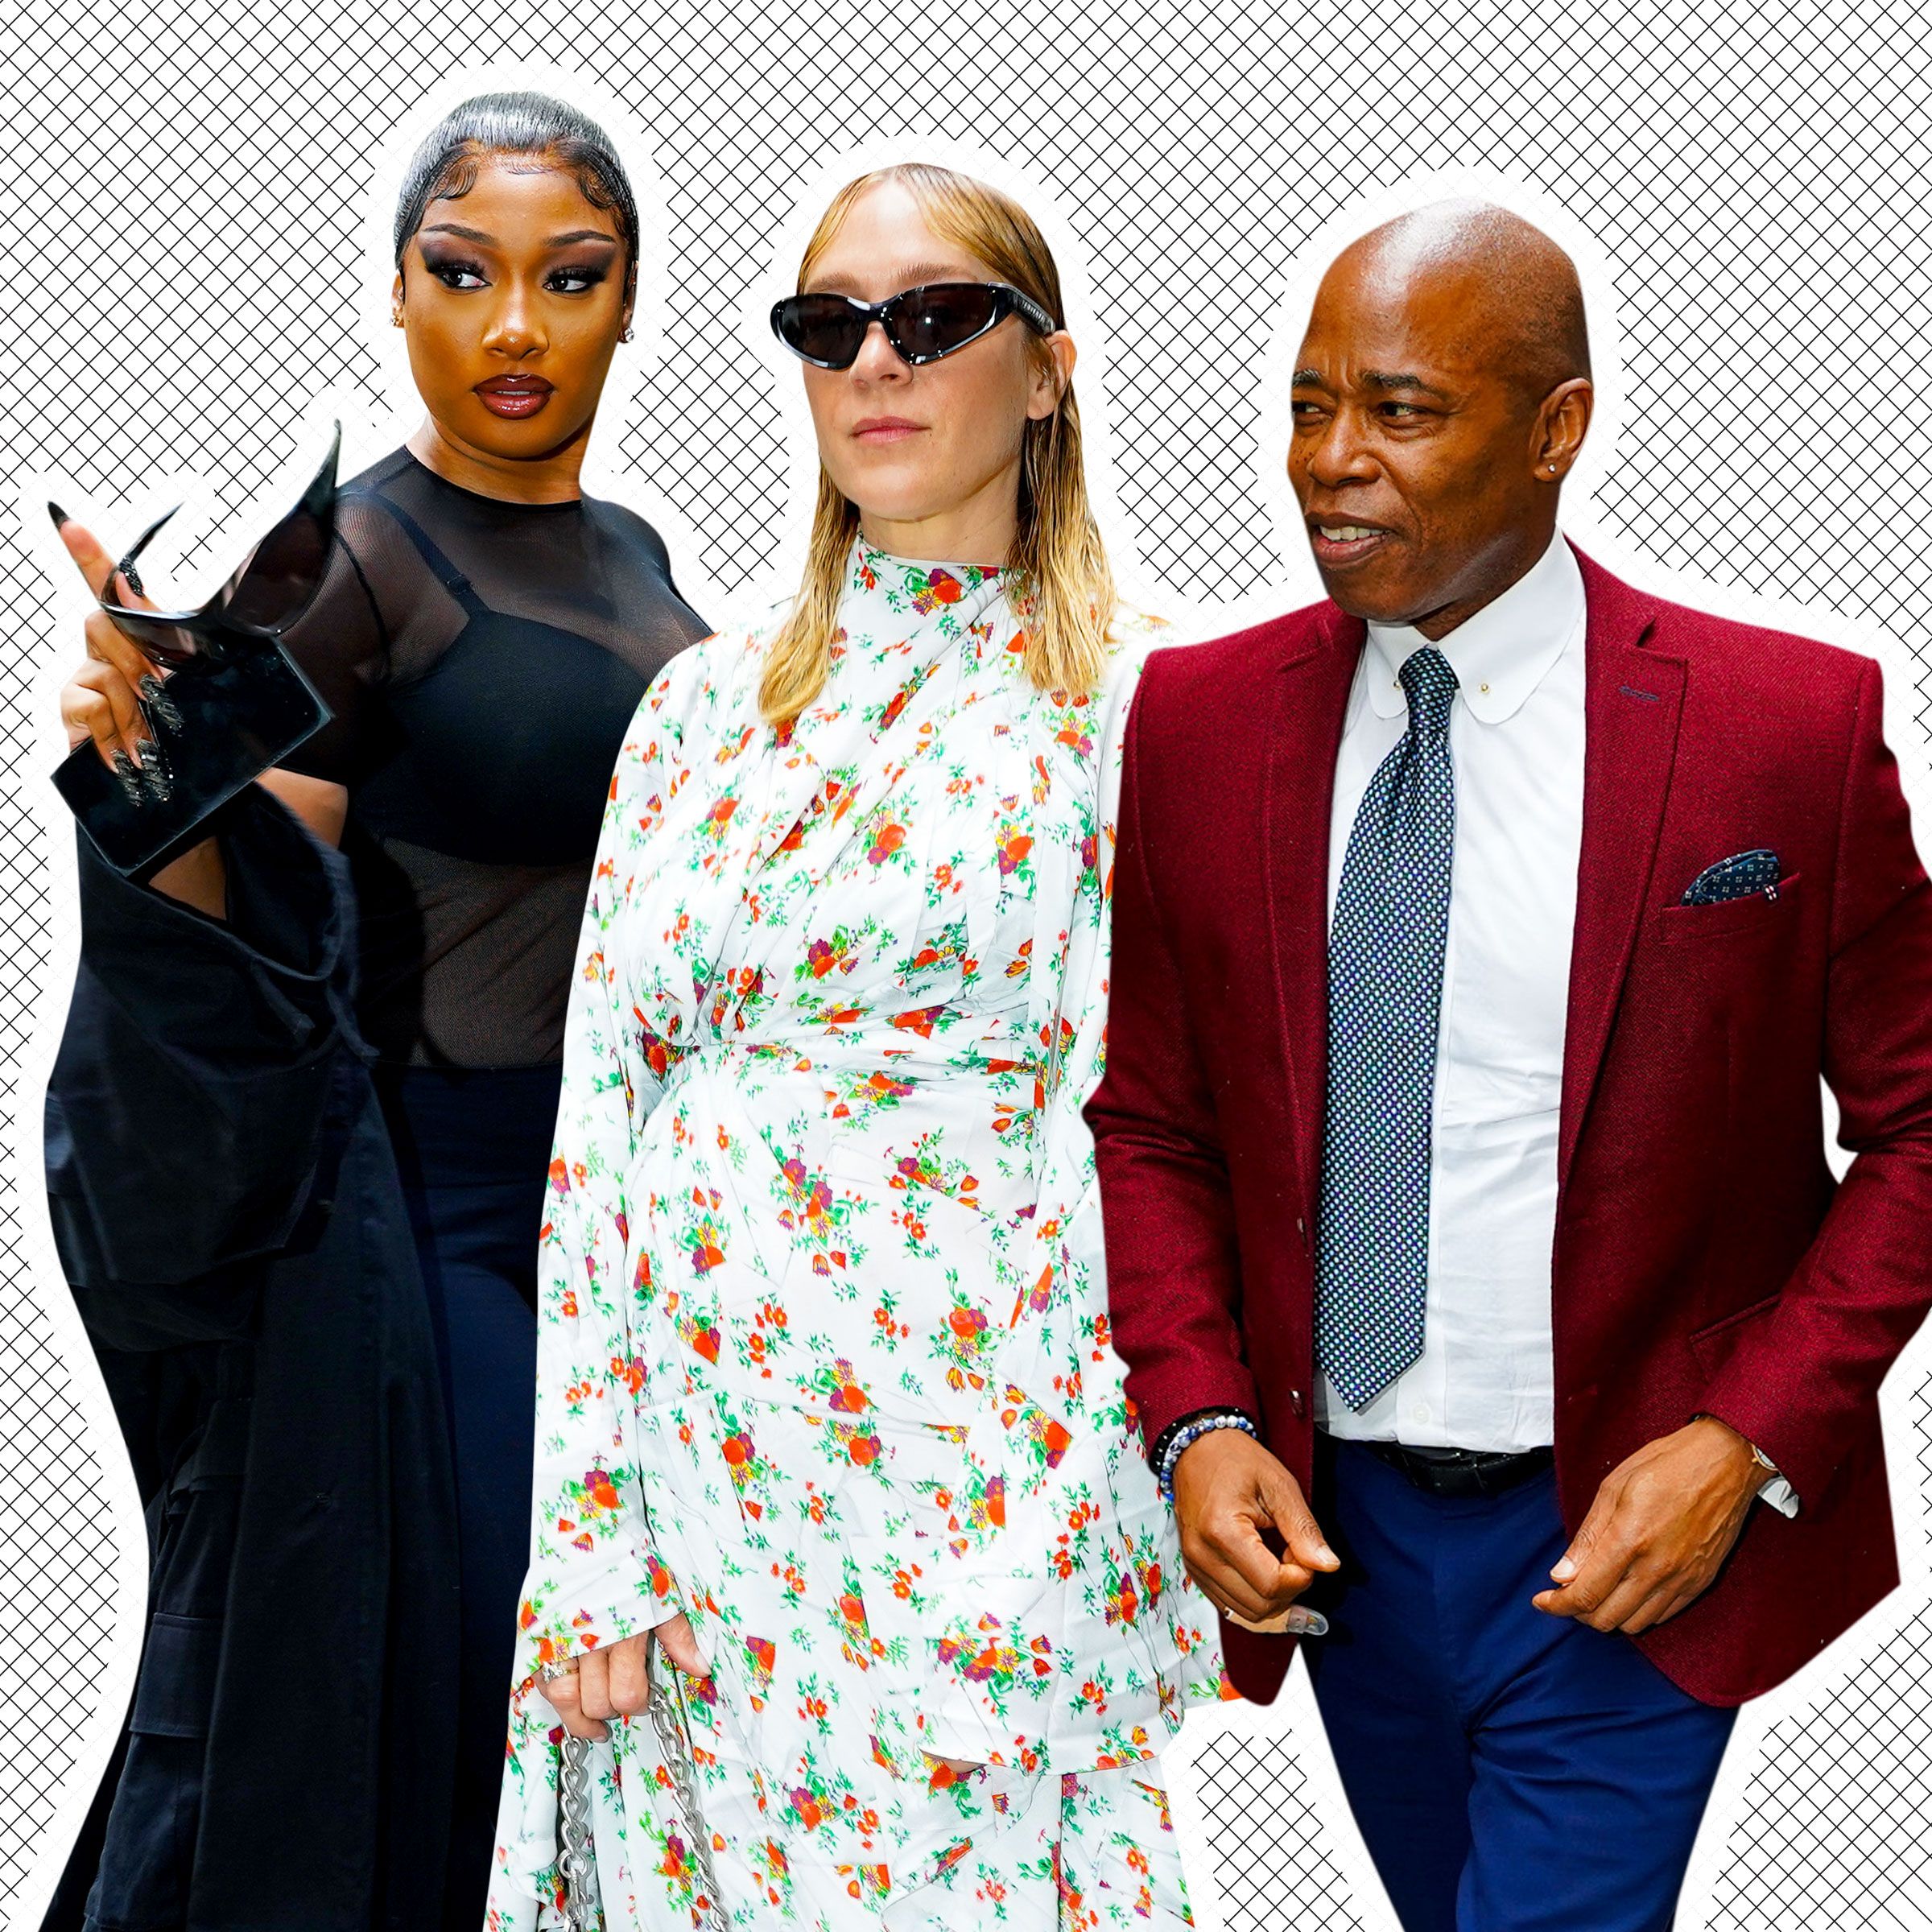 Balenciaga couture show 2022: 3 celebs who walked the runway